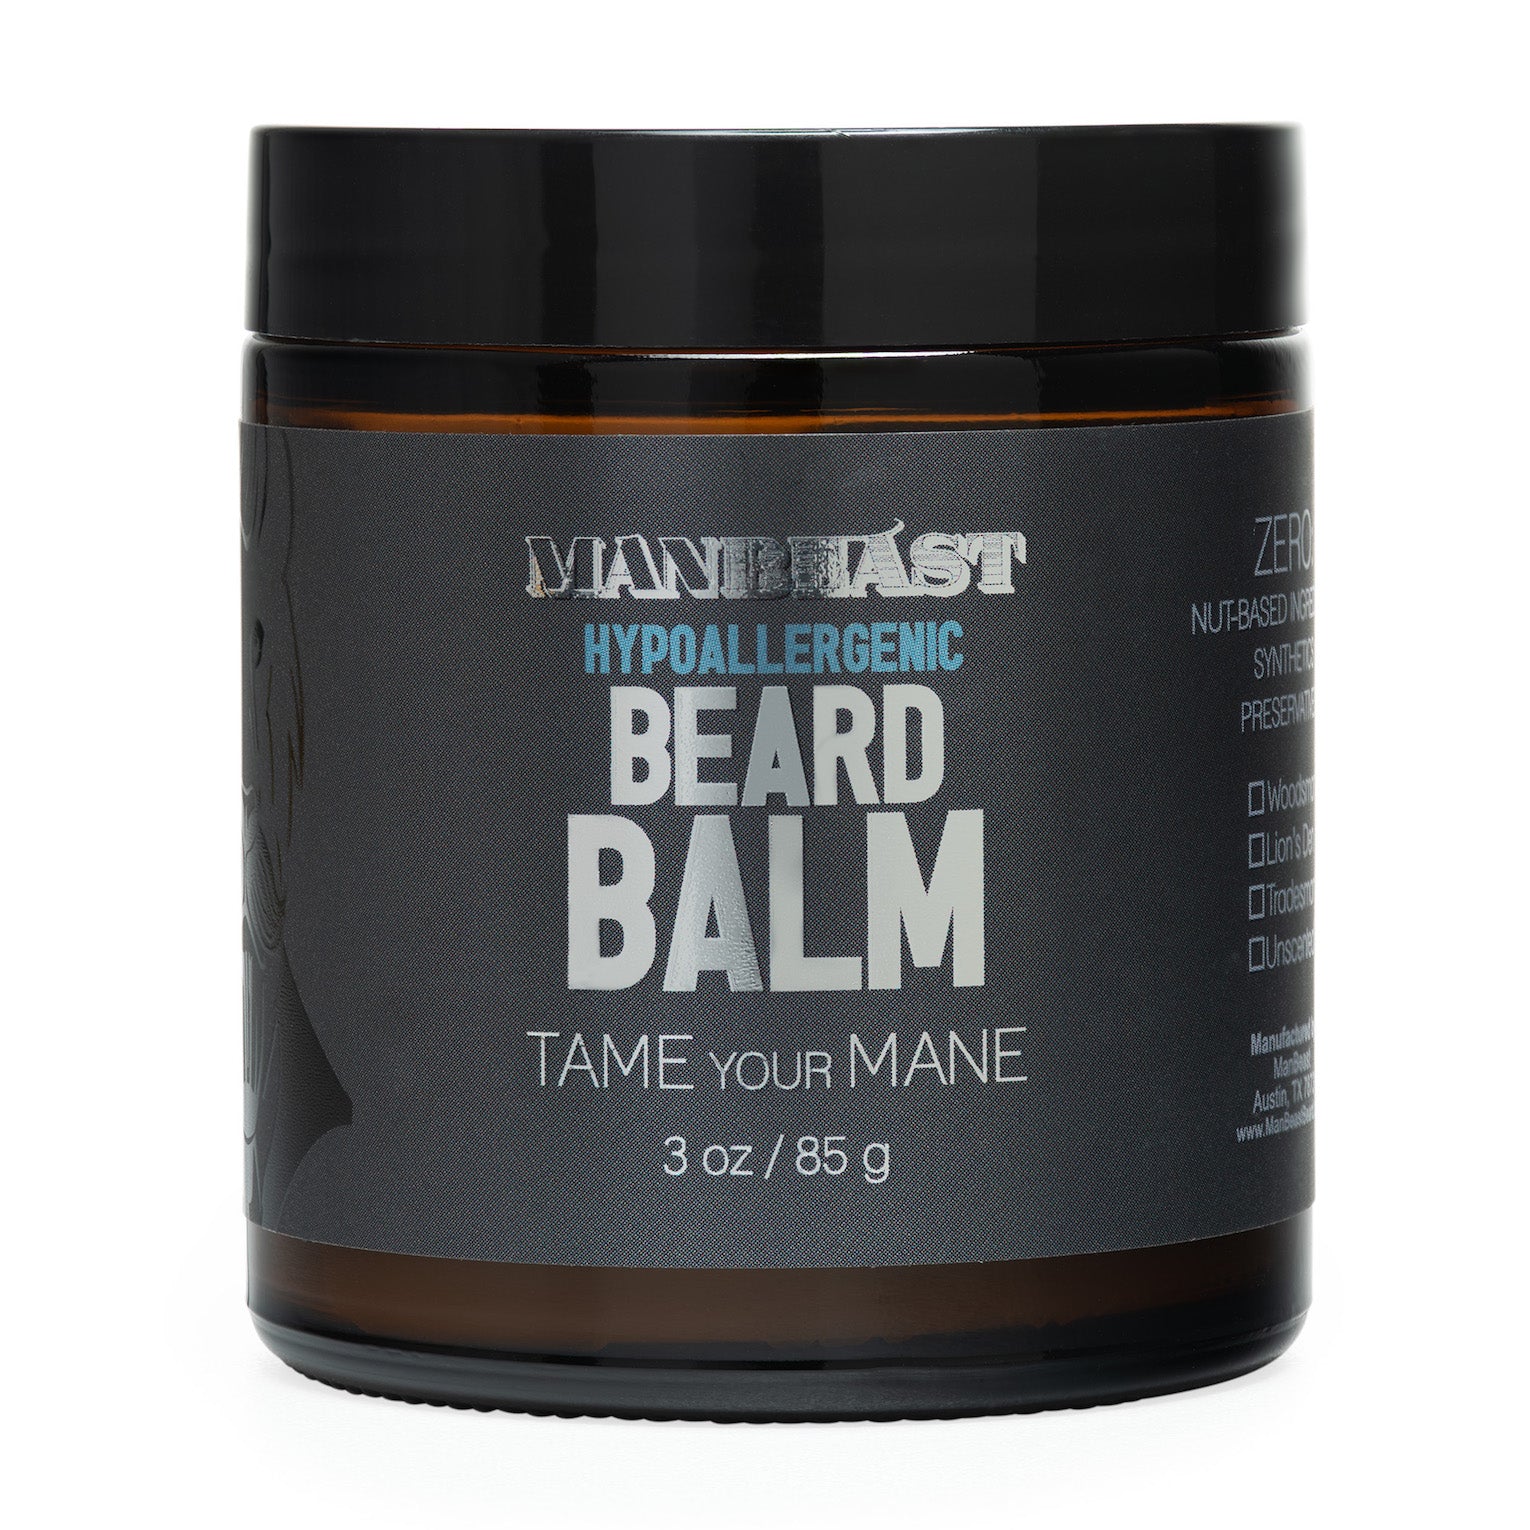 Hypoallergenic / Nut-Free Beard Balm